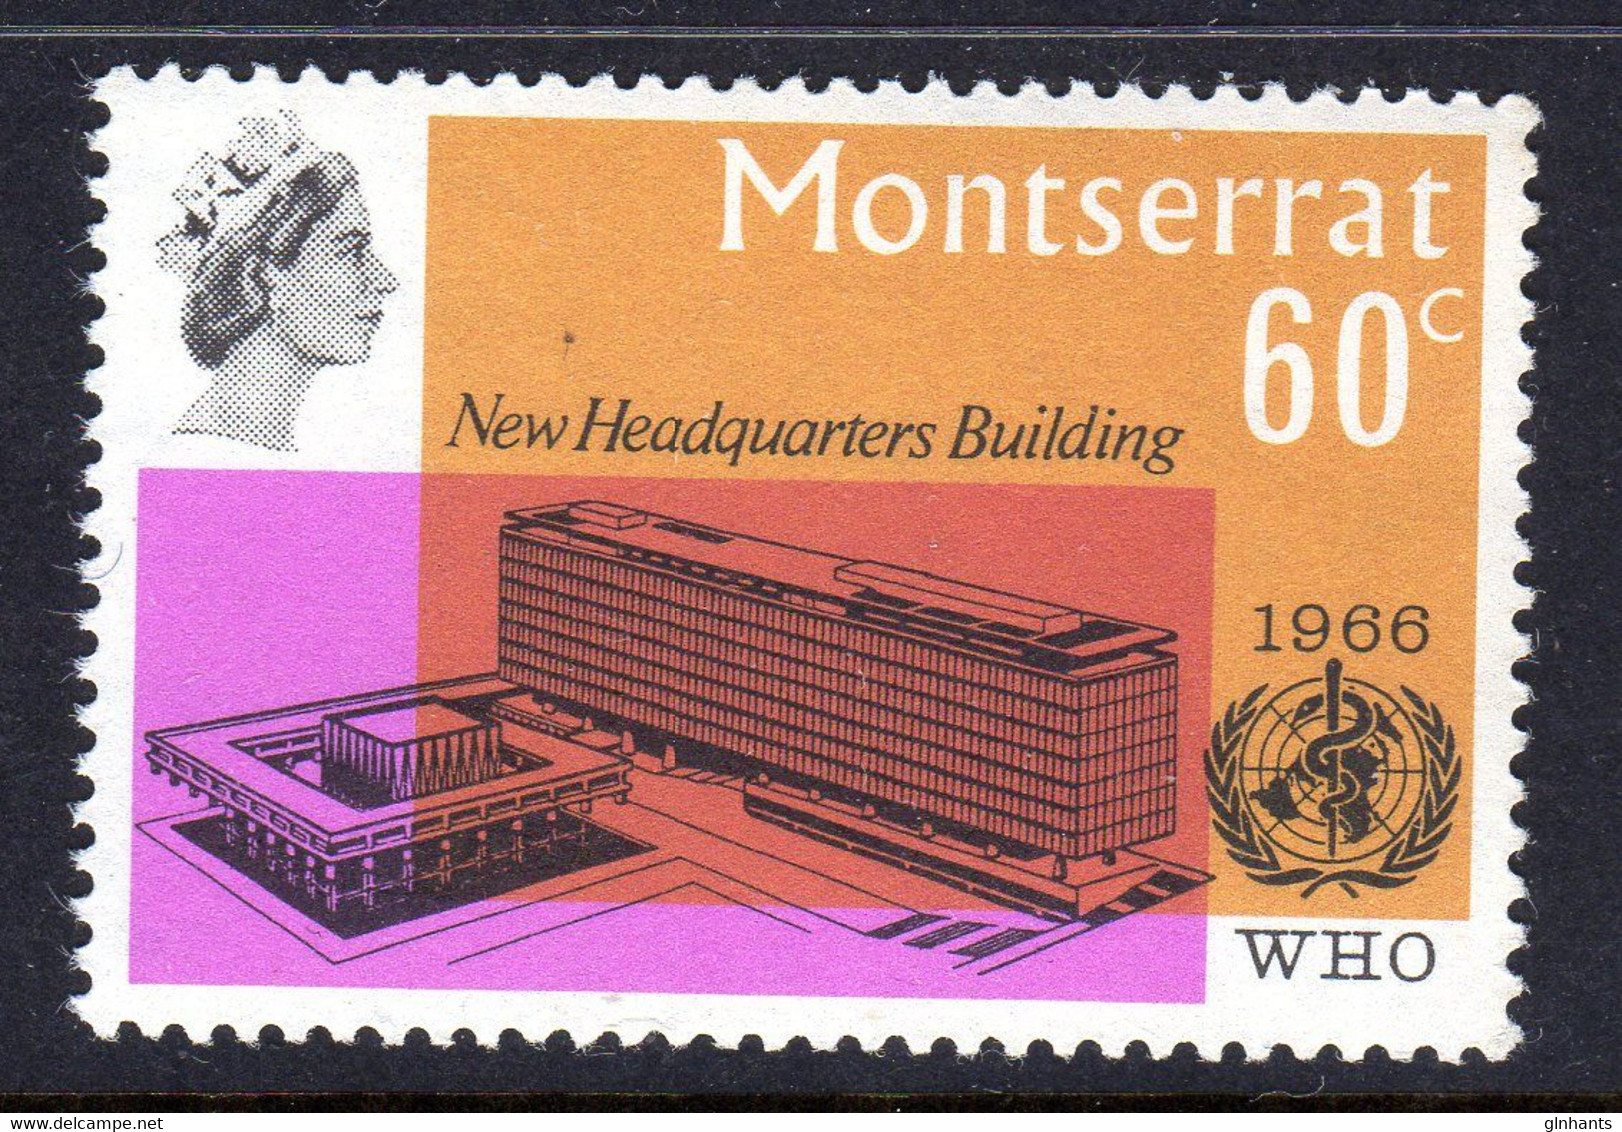 MONTSERRAT - 1966 WORLD HEALTH ORGANISATION WHO HEADQUARTERS INAUGURATION 60c STAMP FINE MNH ** SG 186 - Montserrat